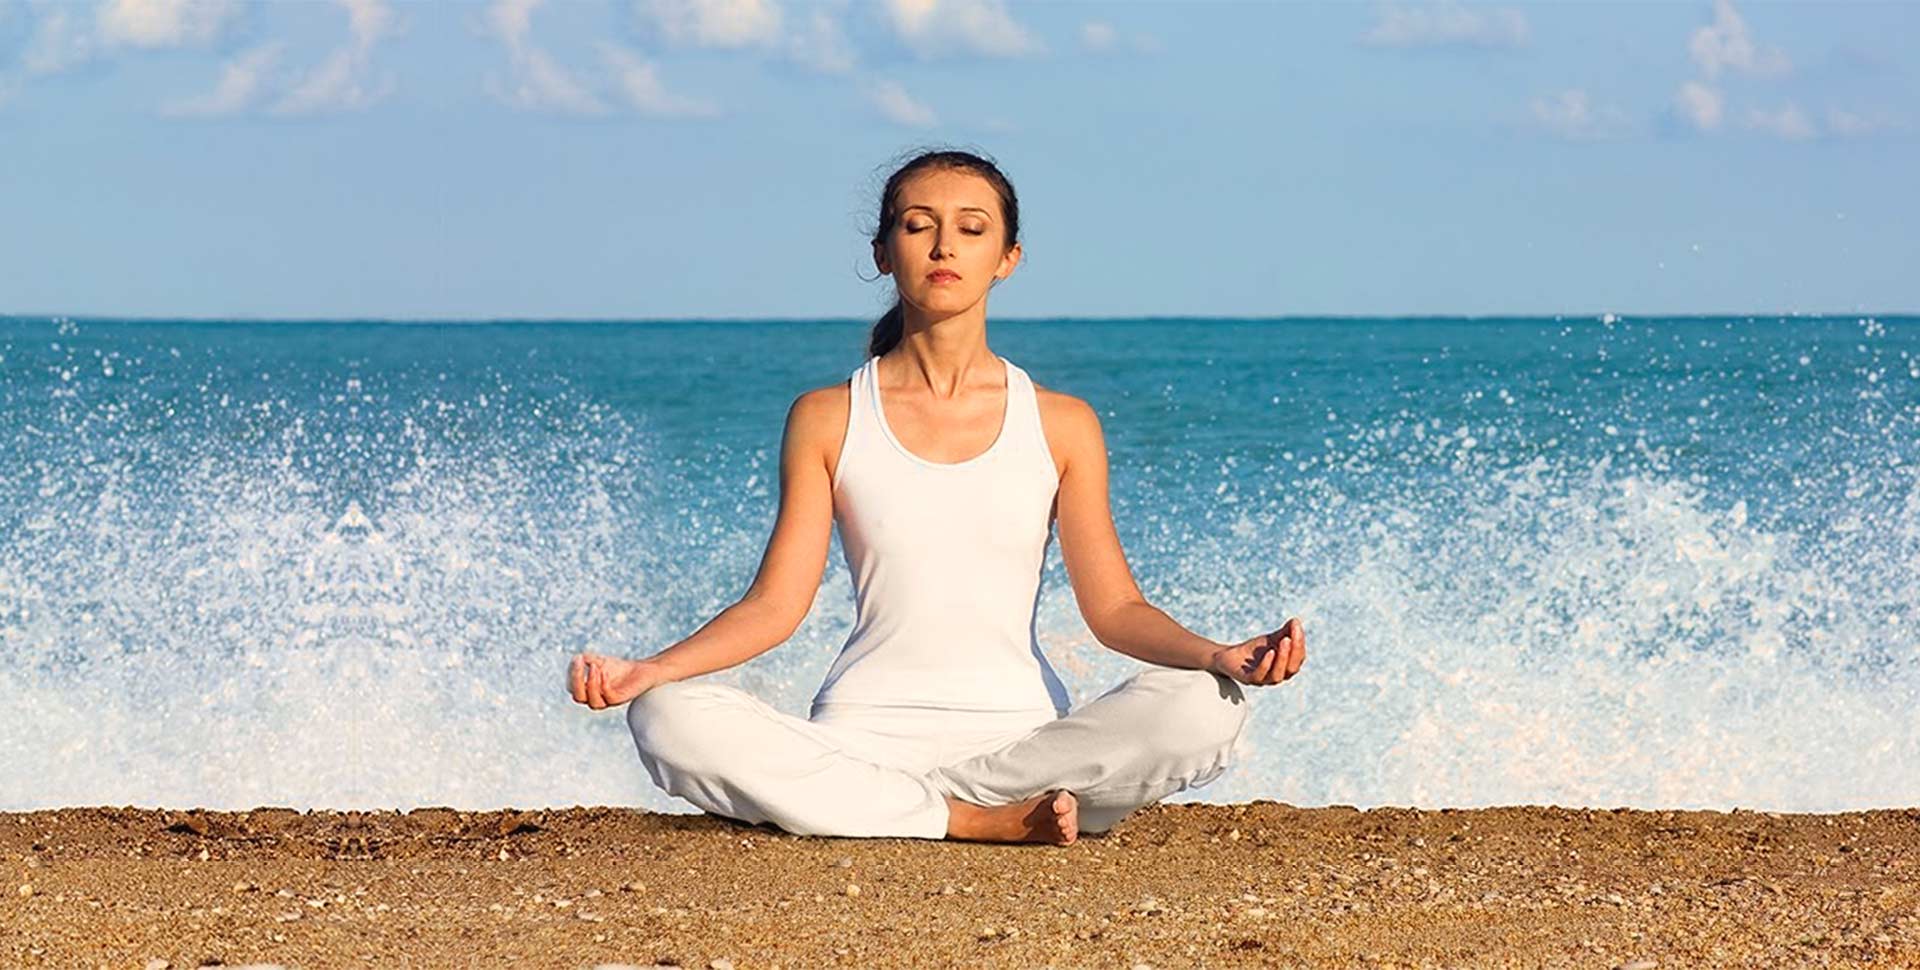 Meditation healing. Медитация на берегу моря. Медитация на море. Девушка медитирует на берегу моря. Йога на берегу моря.